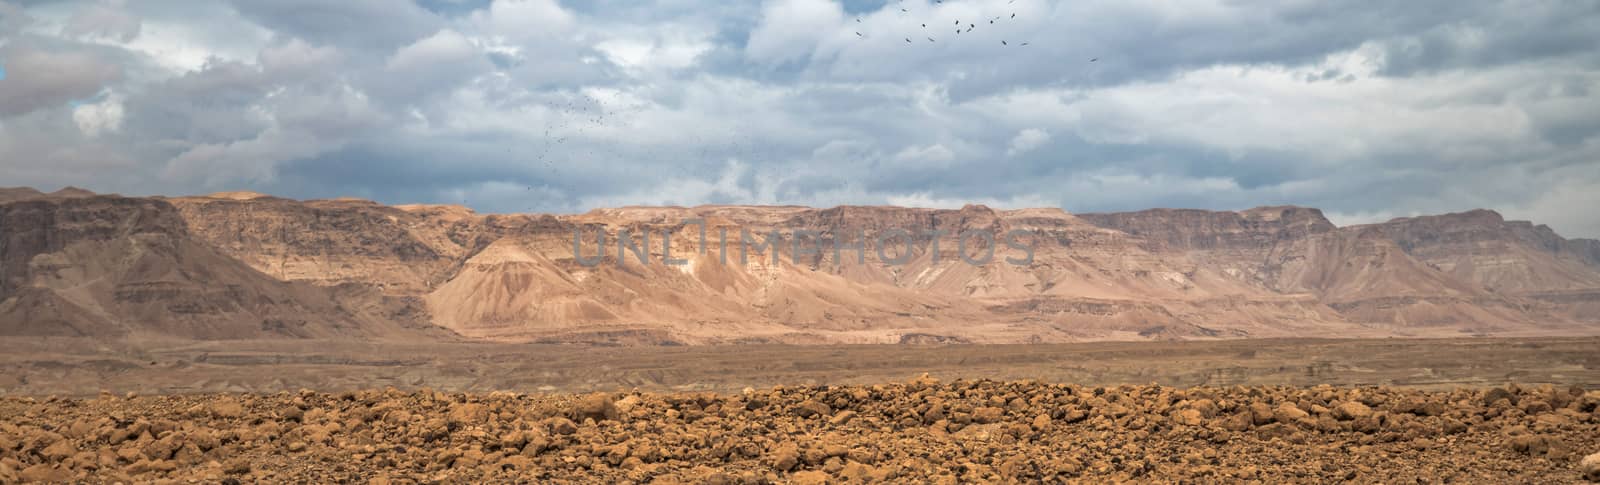 desert of israel near masada at the dead sea